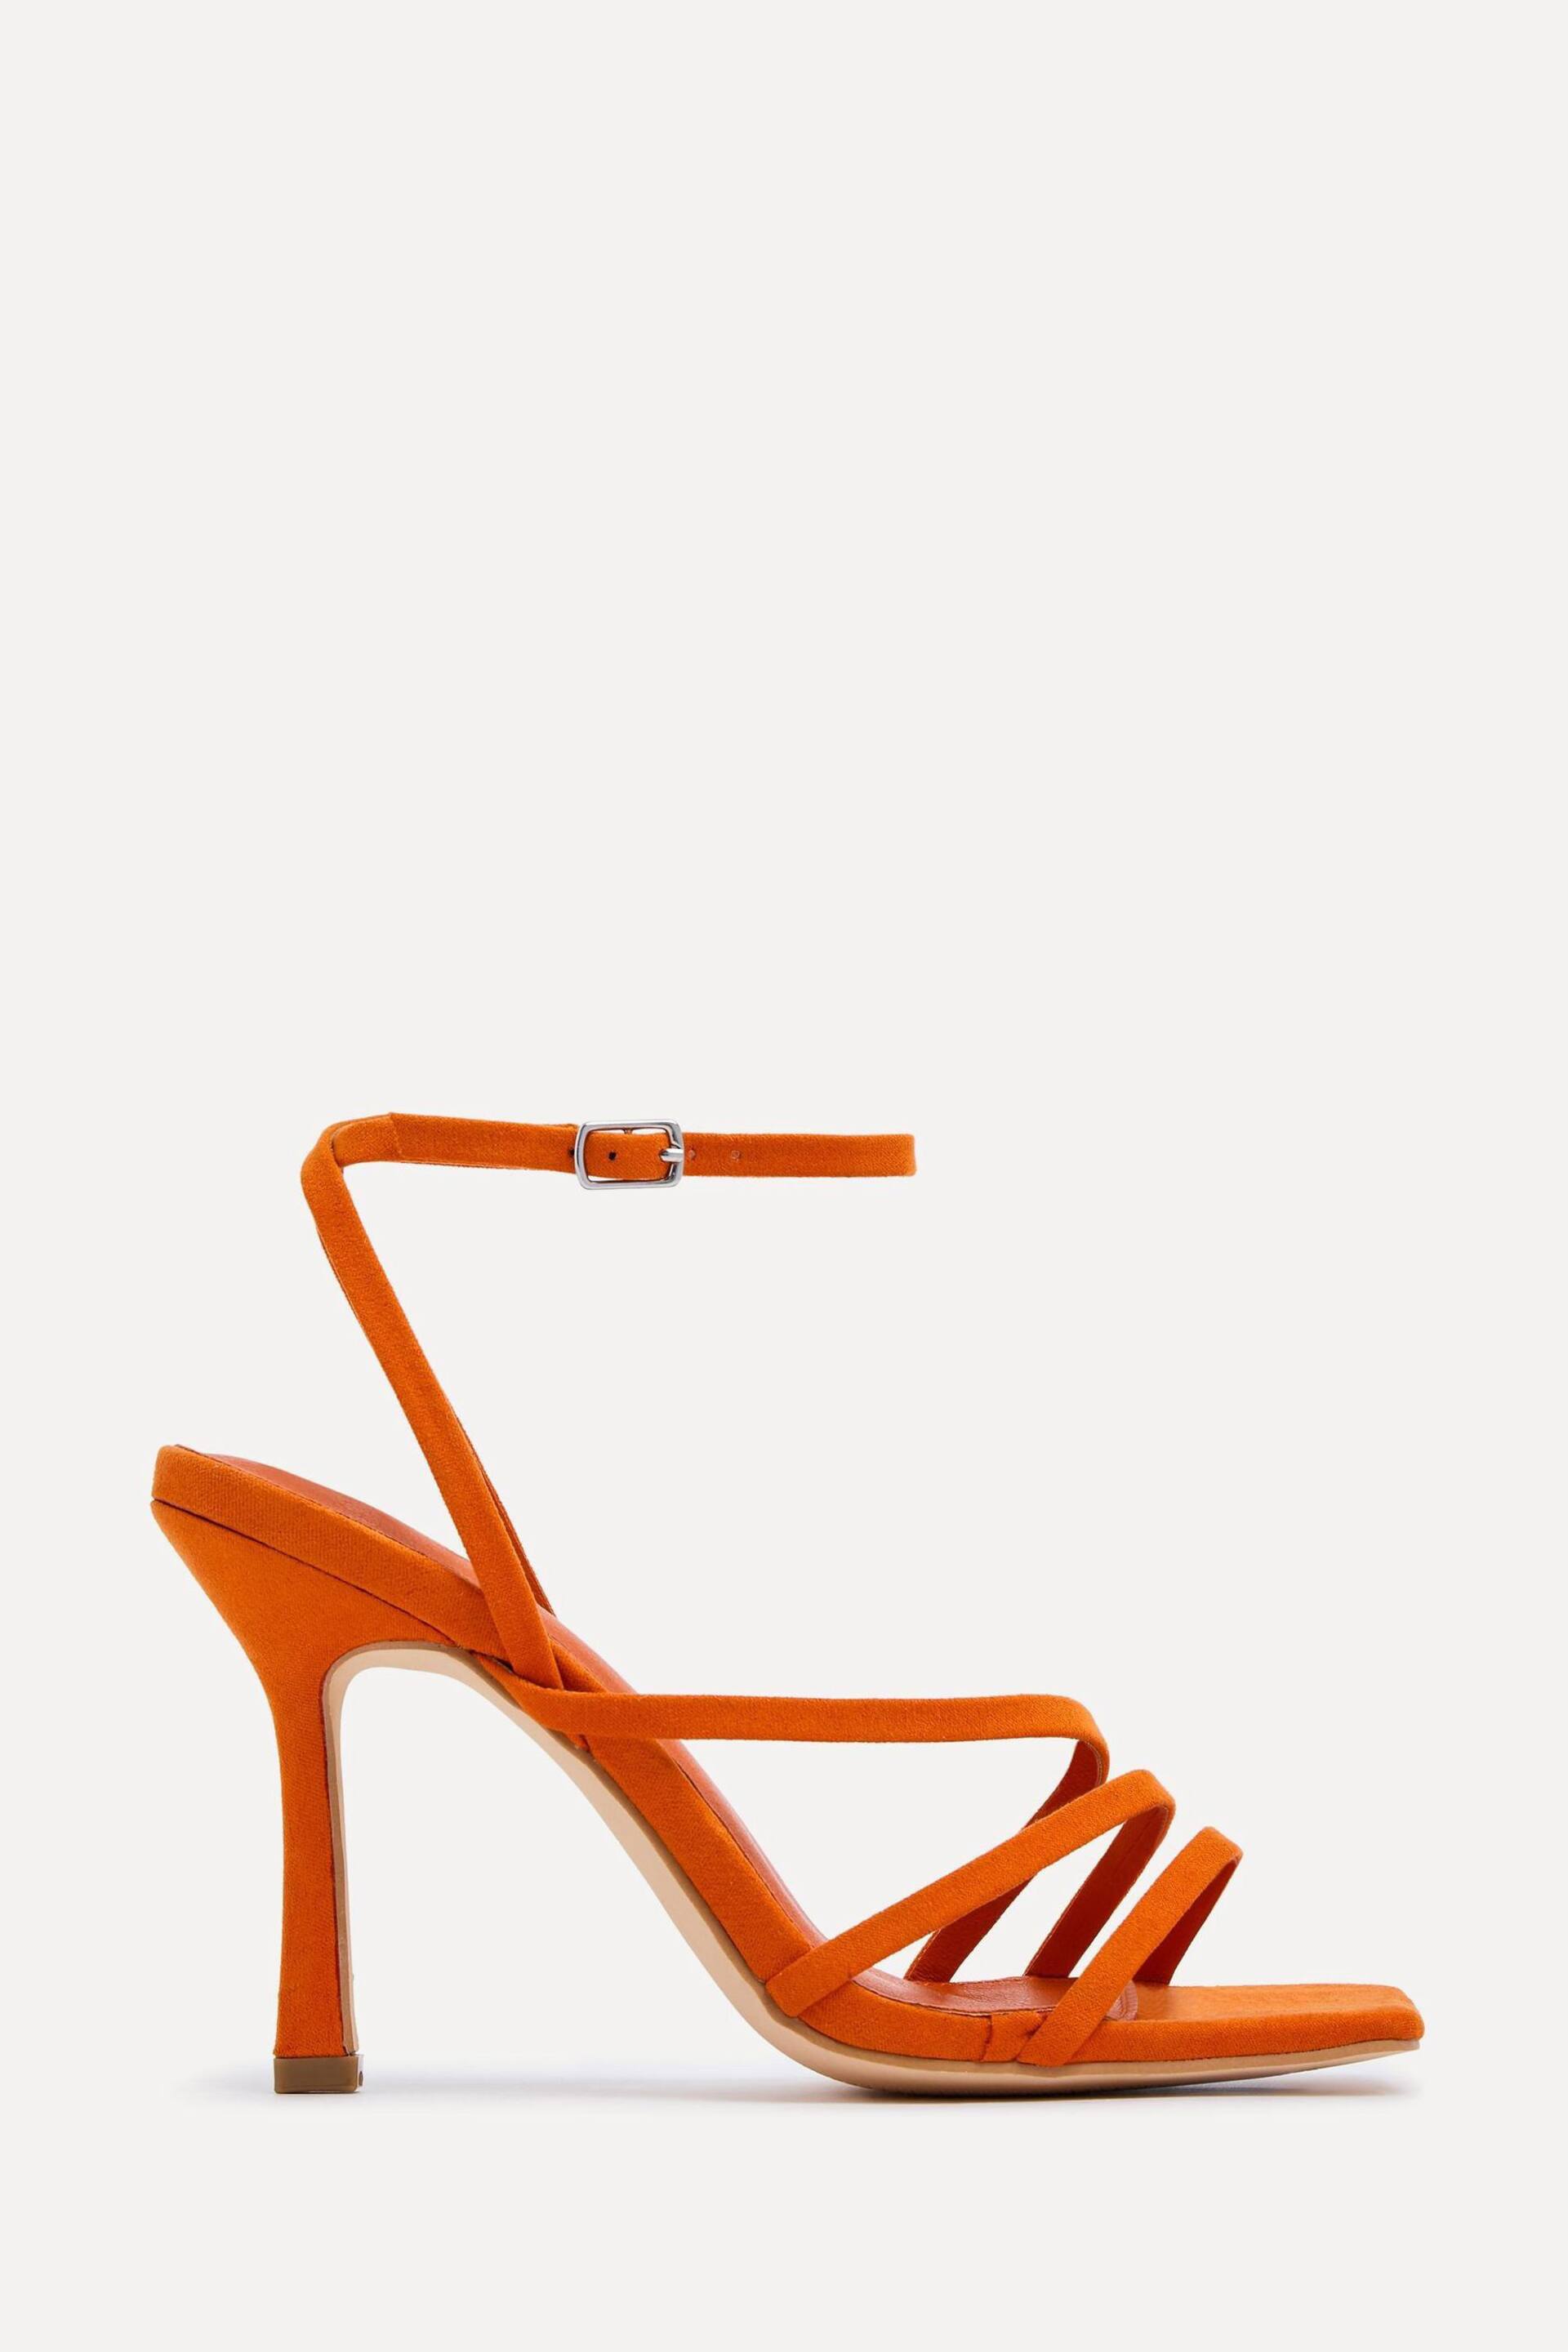 Linzi Orange Scarlett Strappy Heel Sandals With Ankle Strap - Image 2 of 5